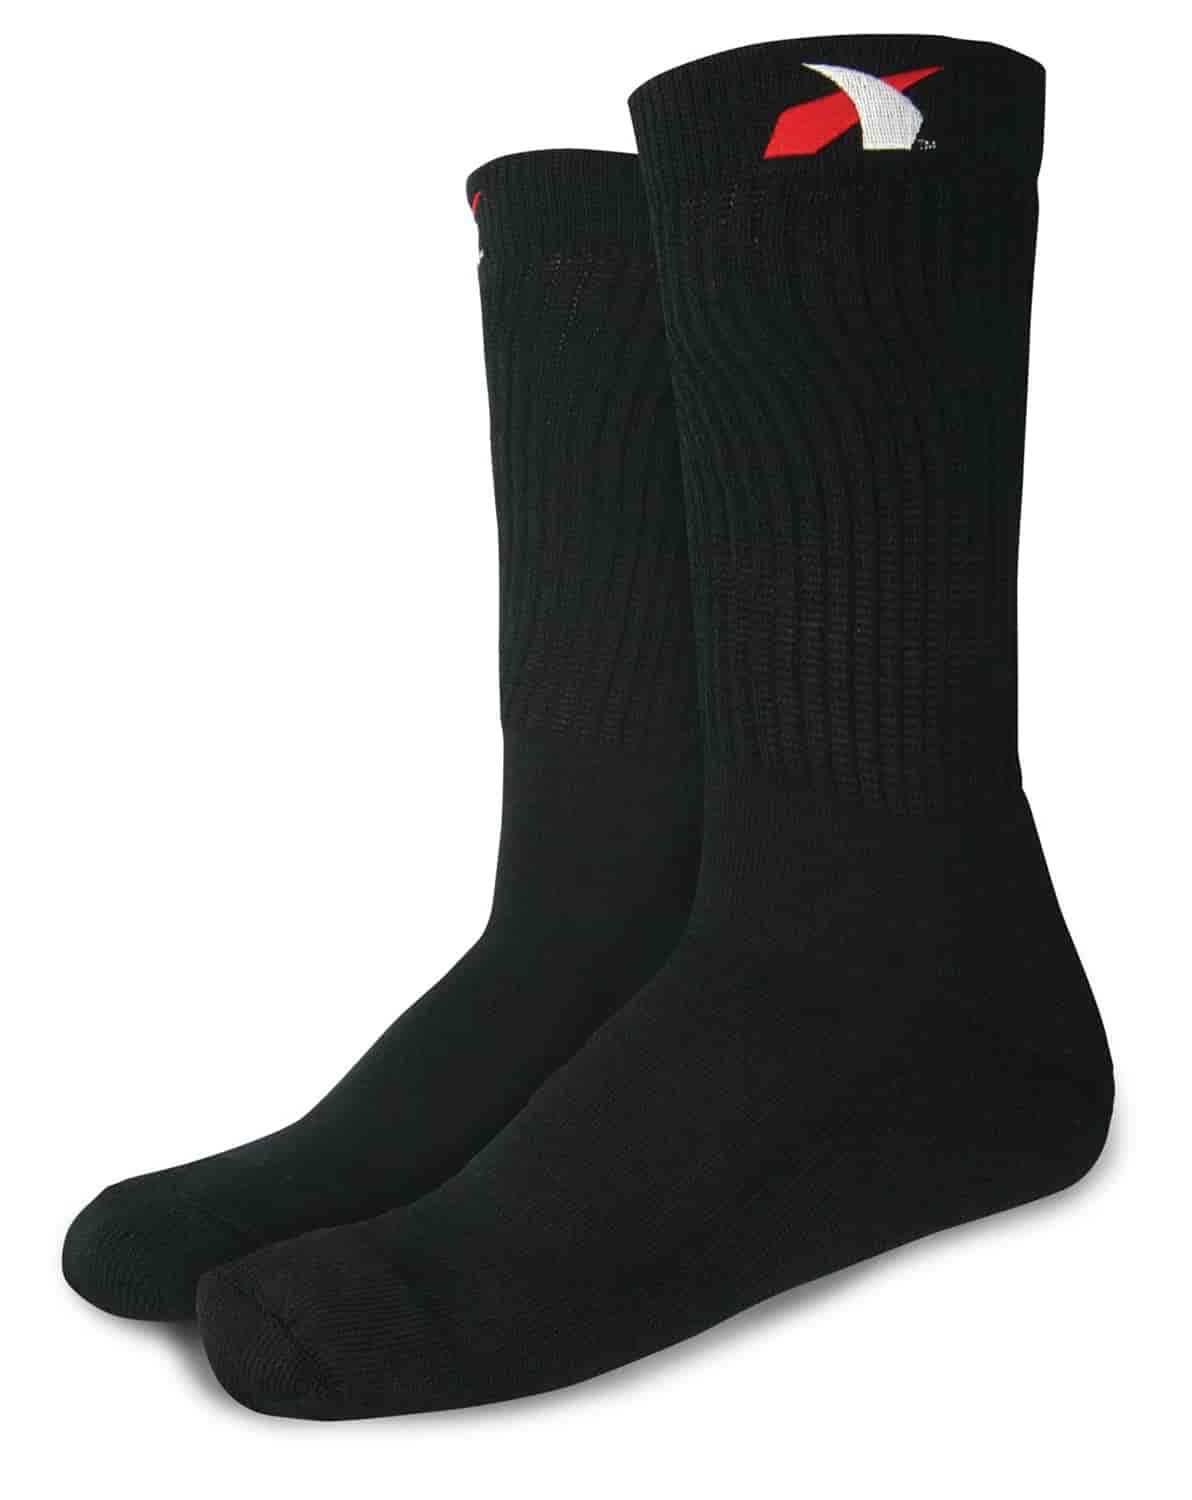 Underwear - Socks SFI3.3 Large, Black